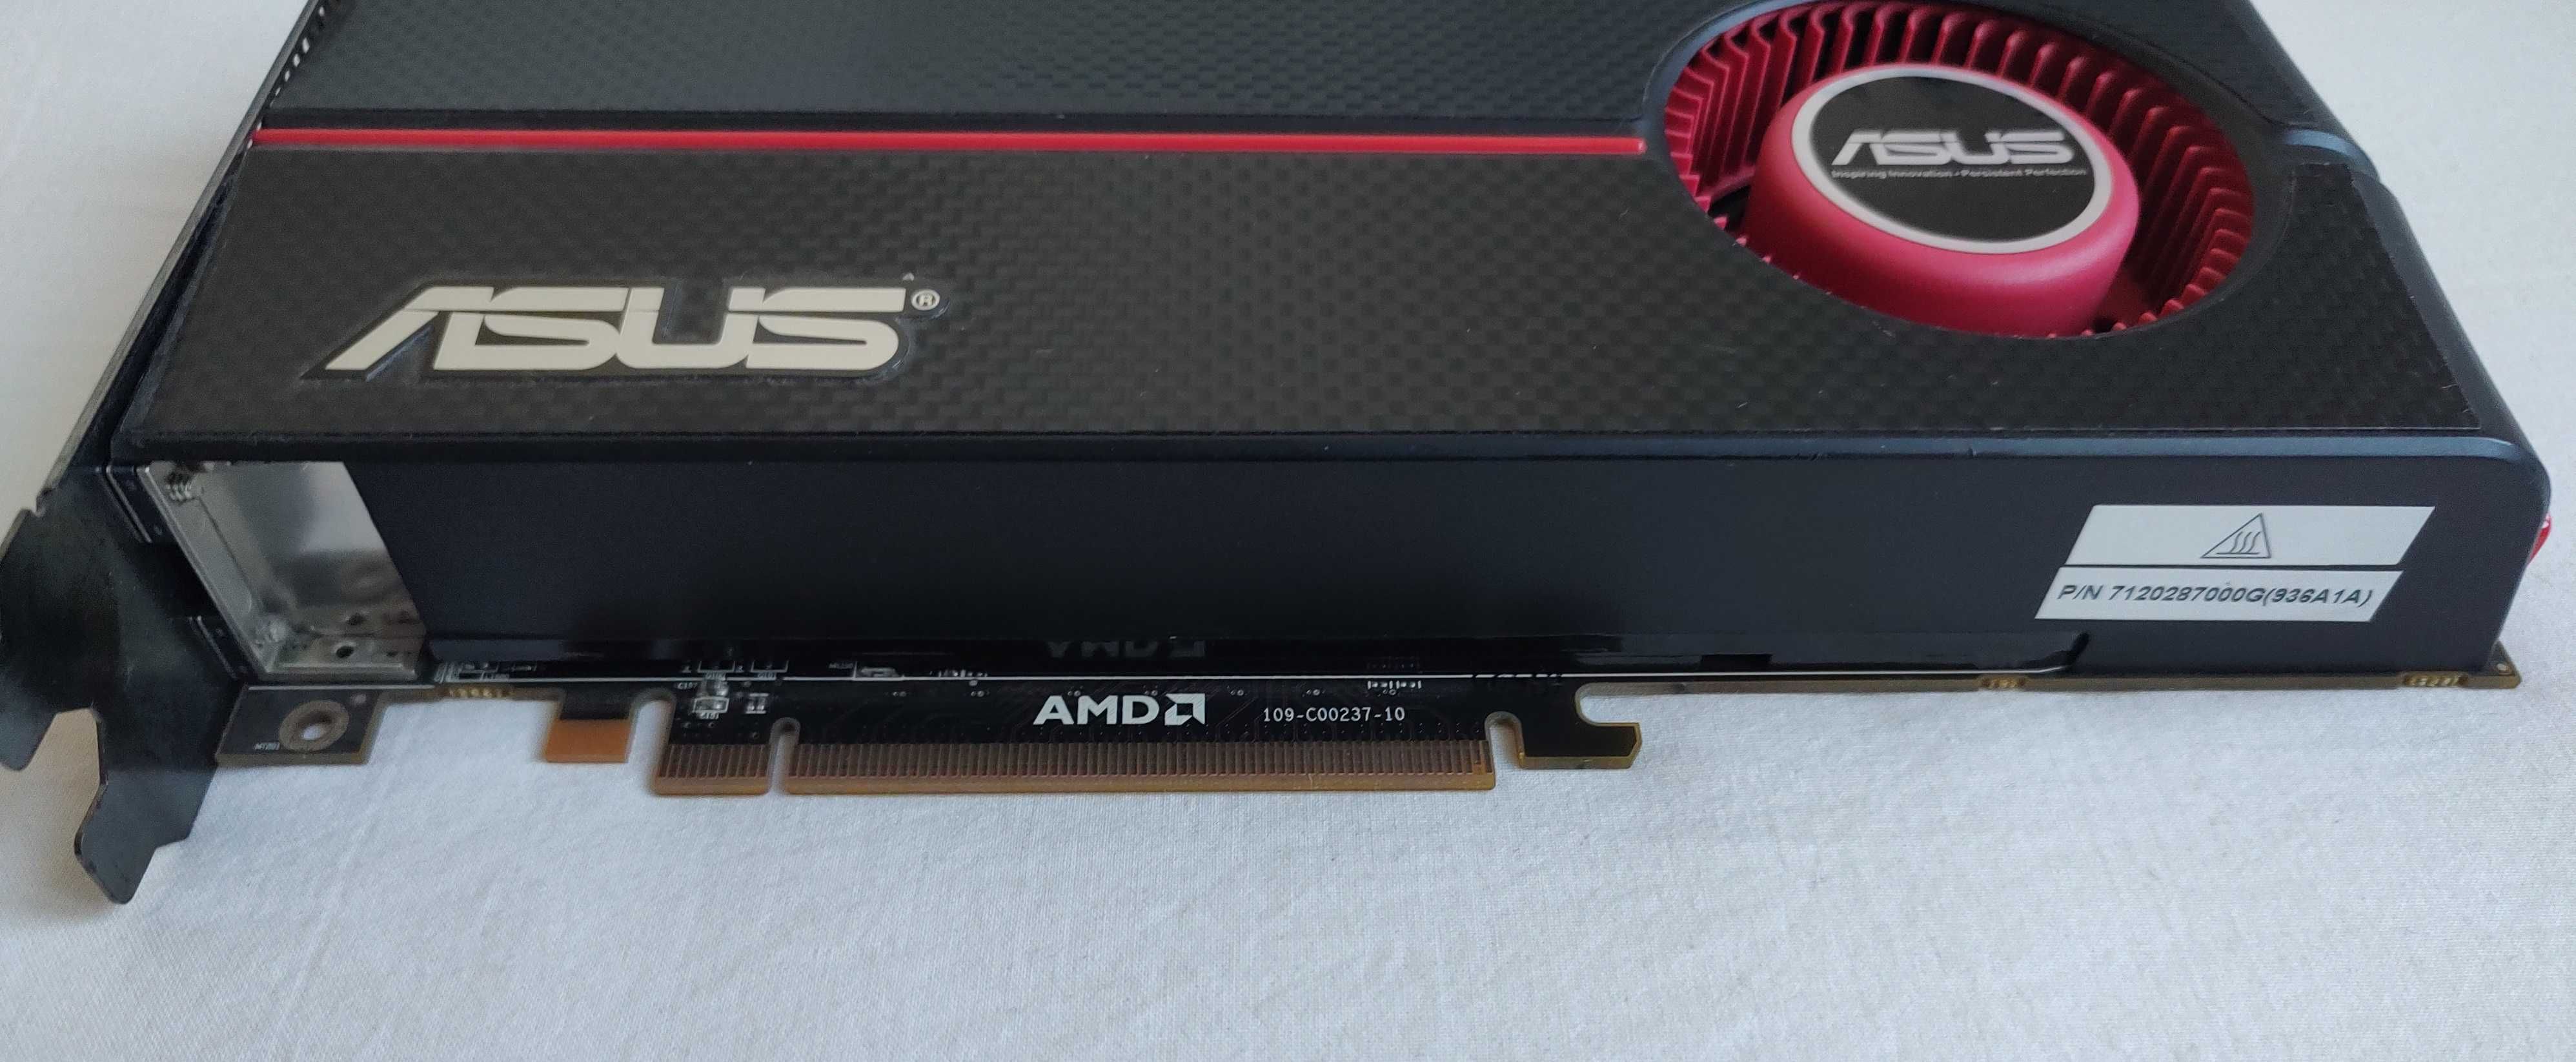 Karta graficzna ASUS AMD RADEON HD 5850 1GB